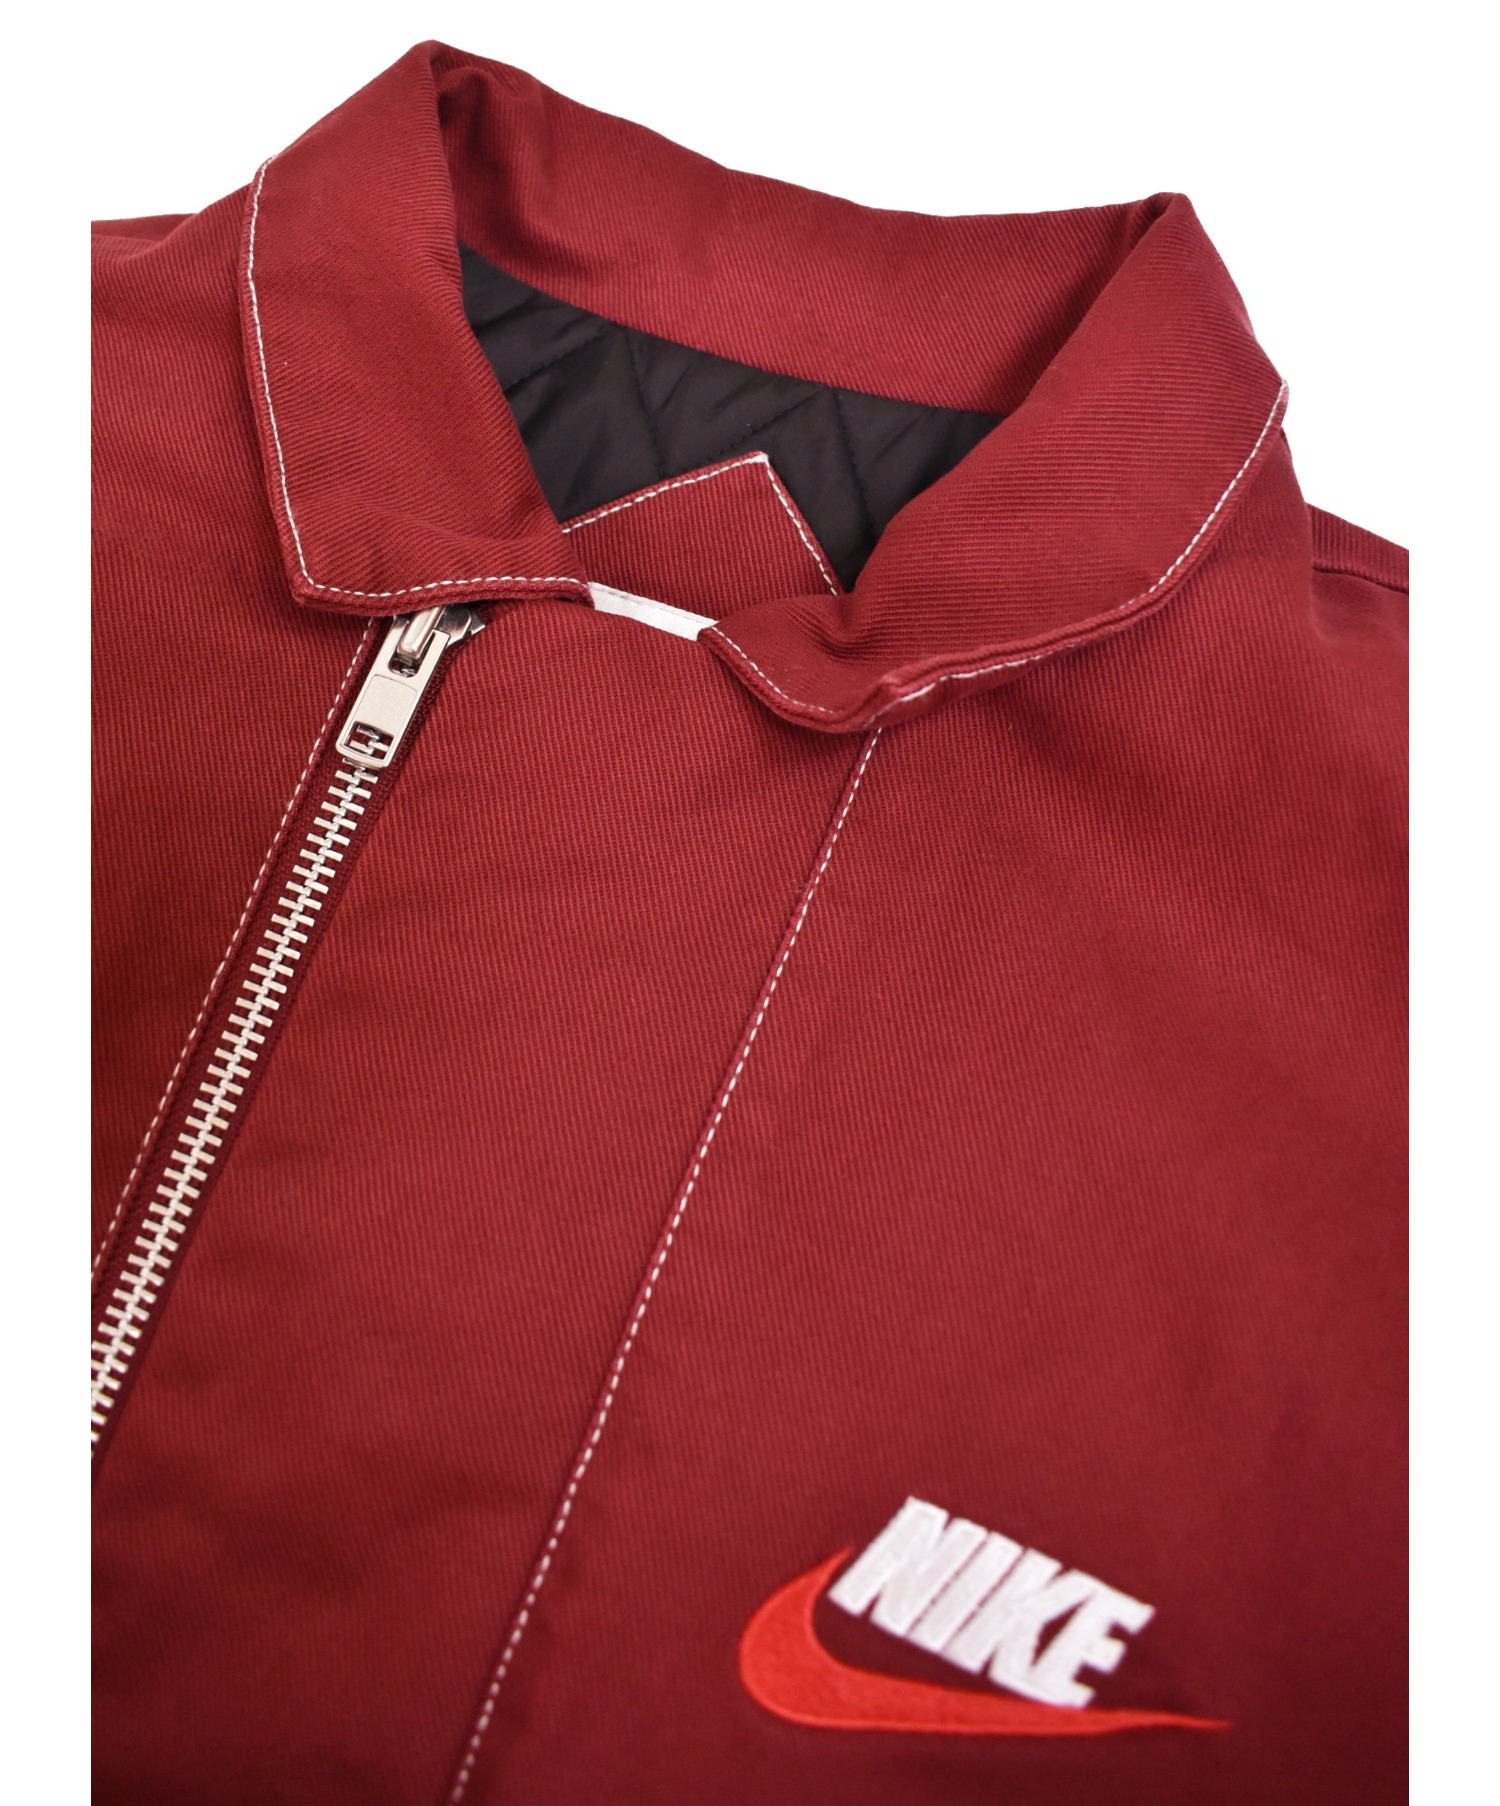 SUPREME×NIKE (シュプリーム×ナイキ) 18AW ダブルジップ キルティングワークジャケット レッド サイズ:M Double Zip  Quilted Work Jacket